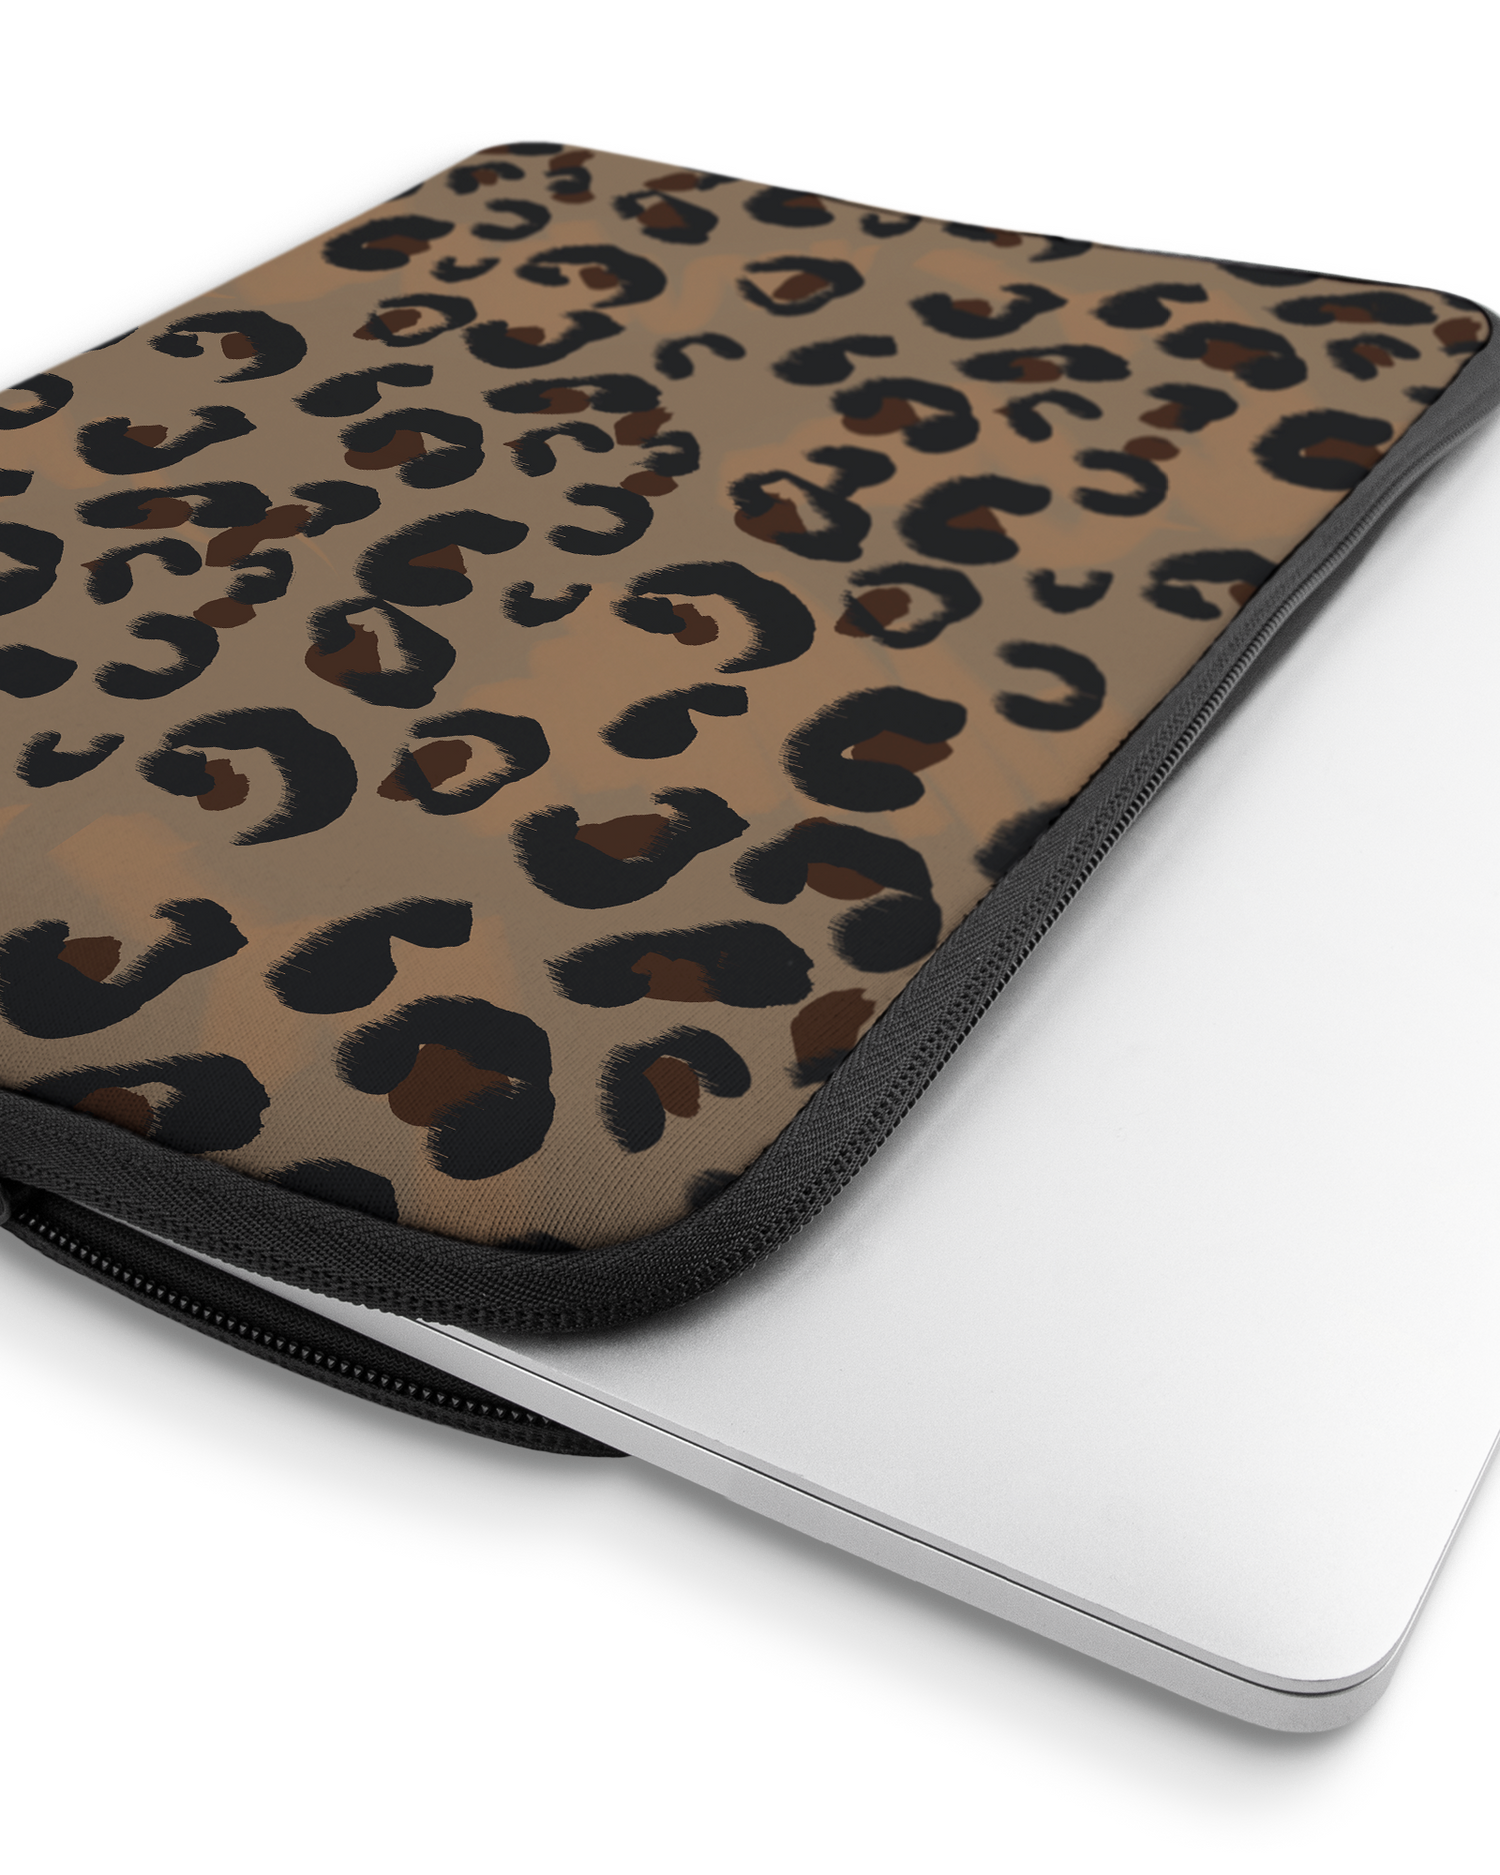 Leopard Repeat Laptophülle 16 Zoll mit Gerät im Inneren